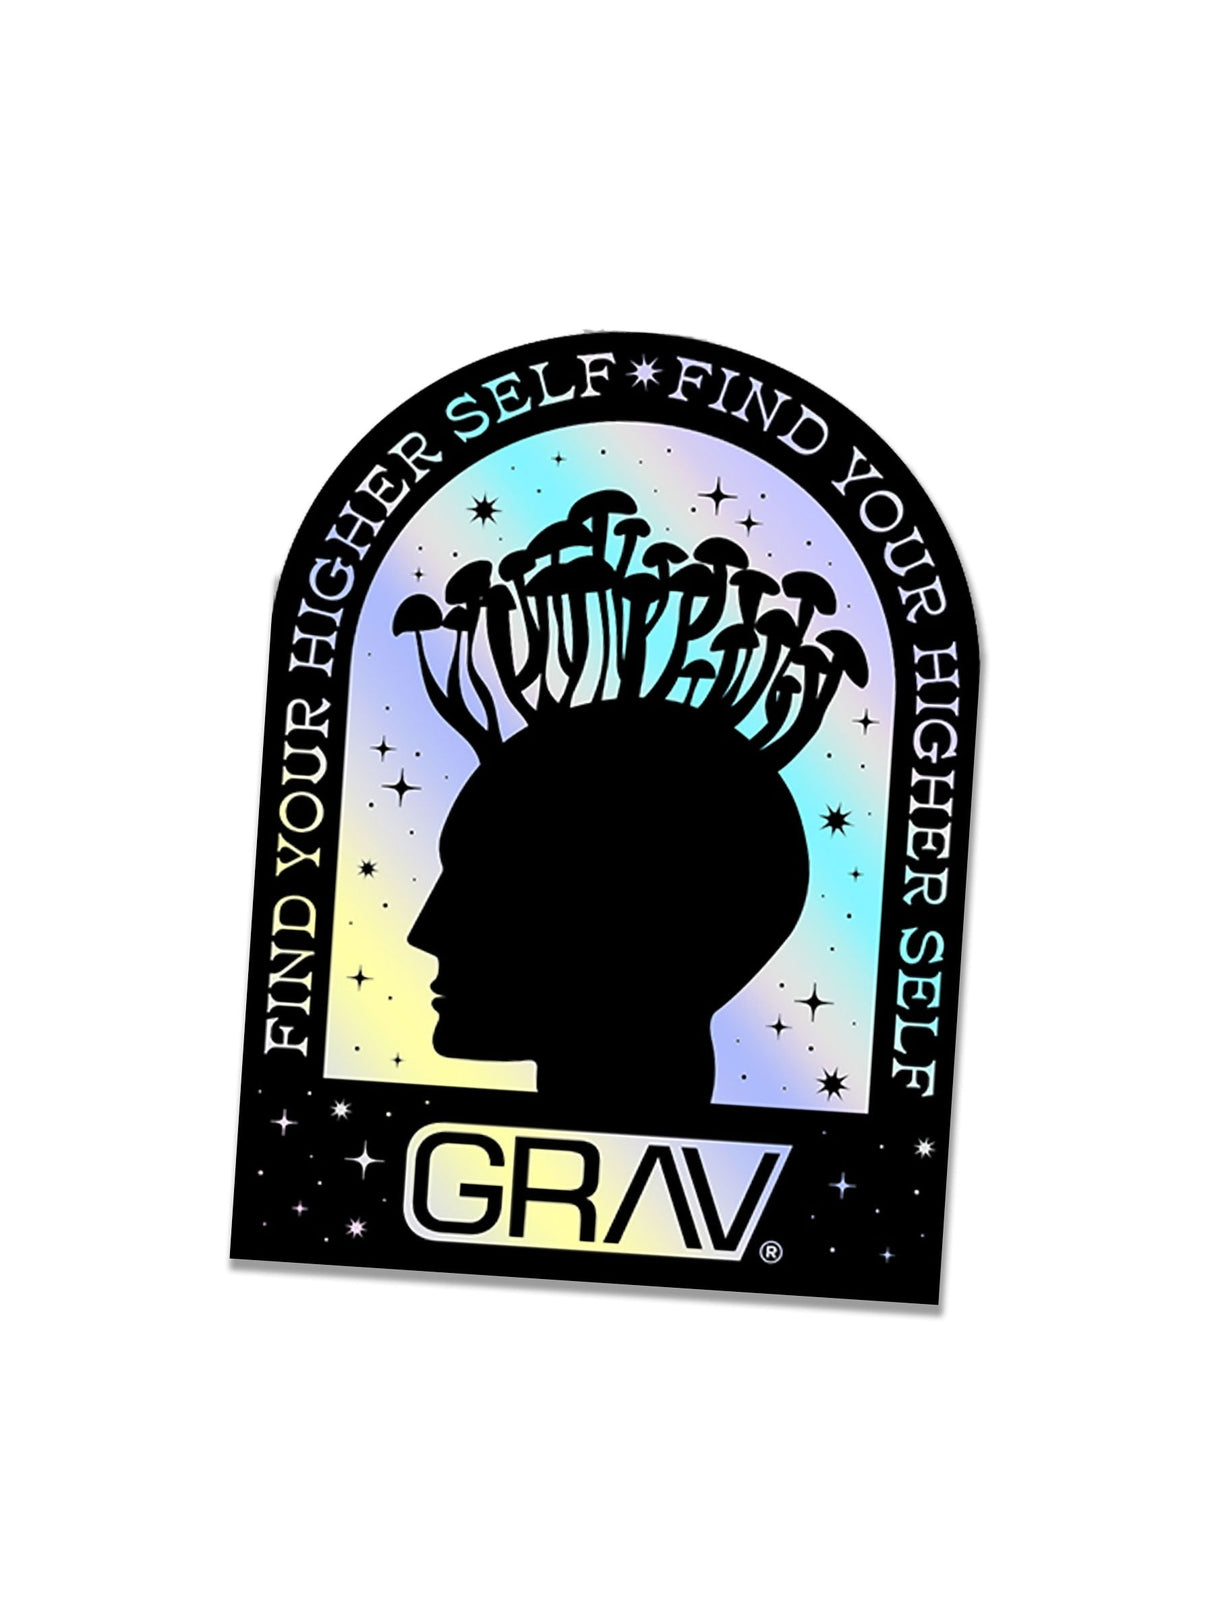 GRAV Festival Bundle sticker with cosmic design and 'Find Your Higher Self' slogan